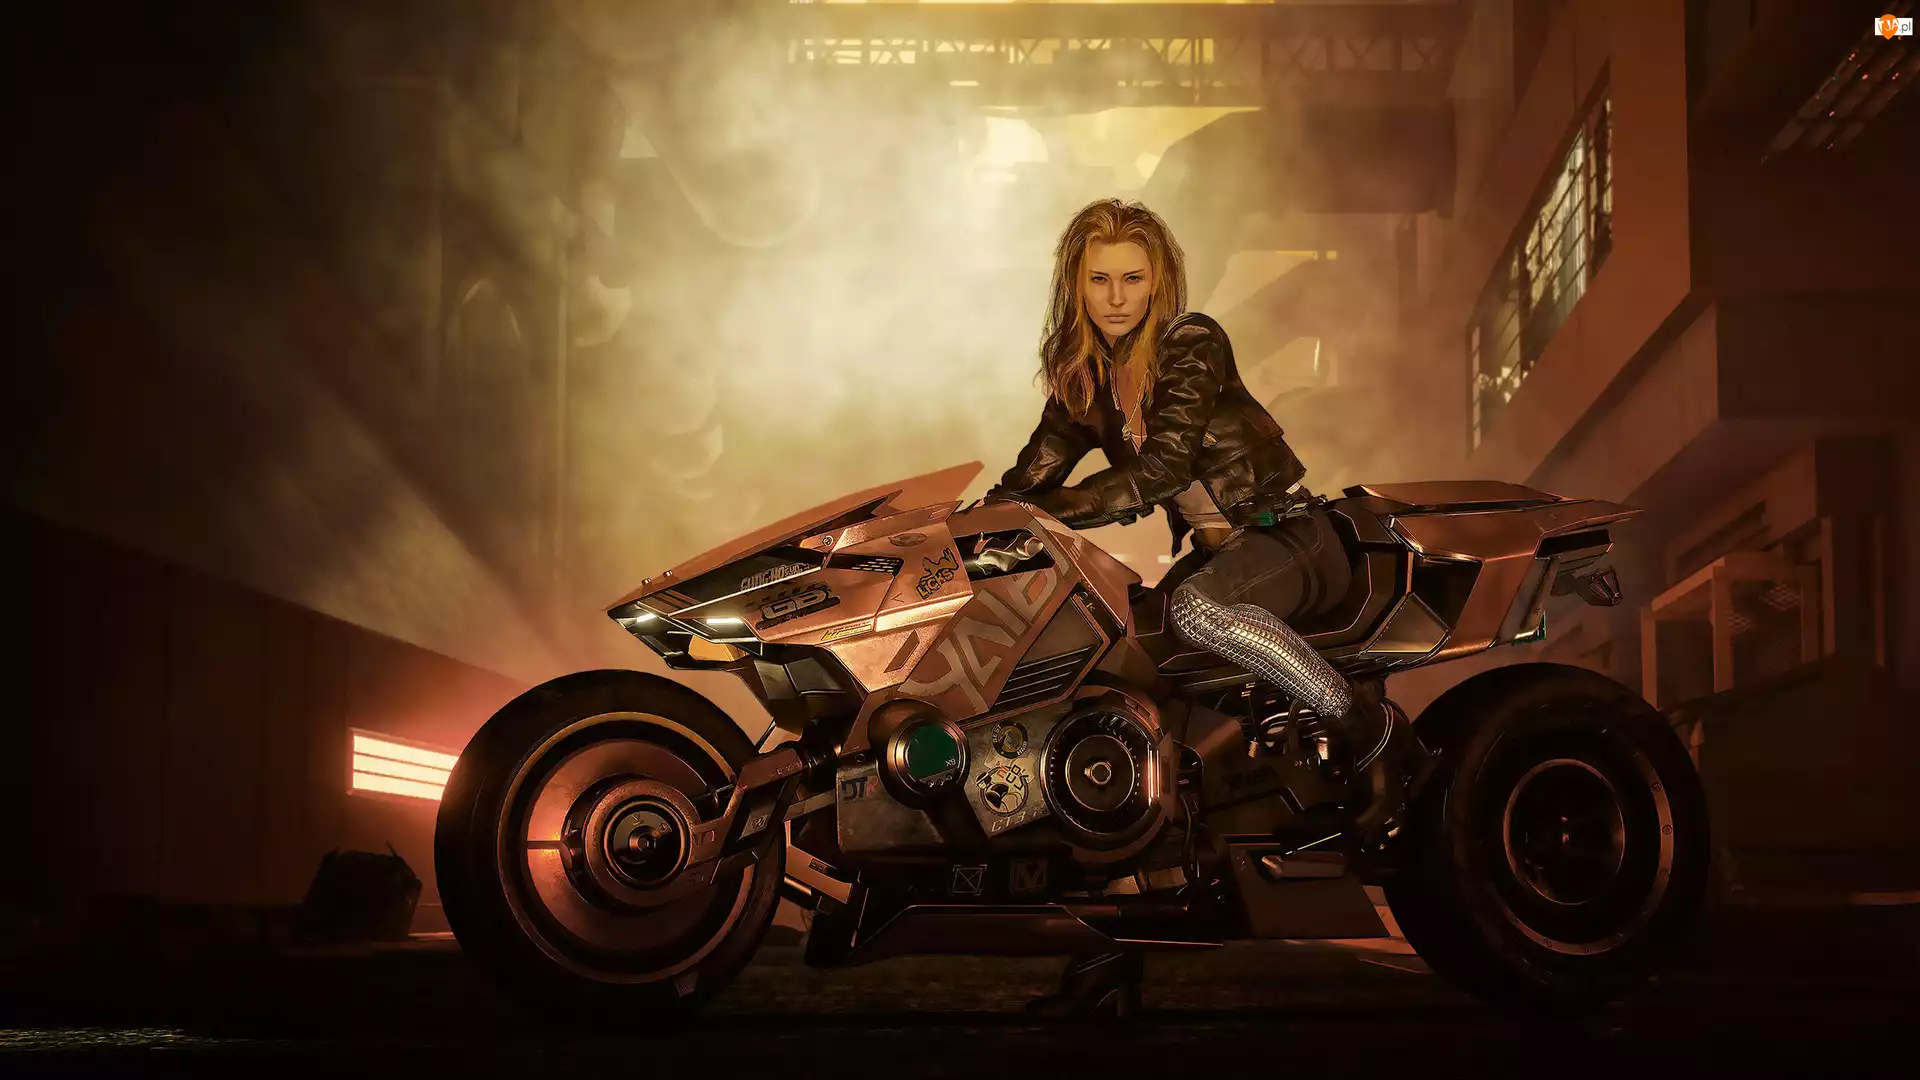 Motocykl, Gra, Cyberpunk 2077, Kobieta